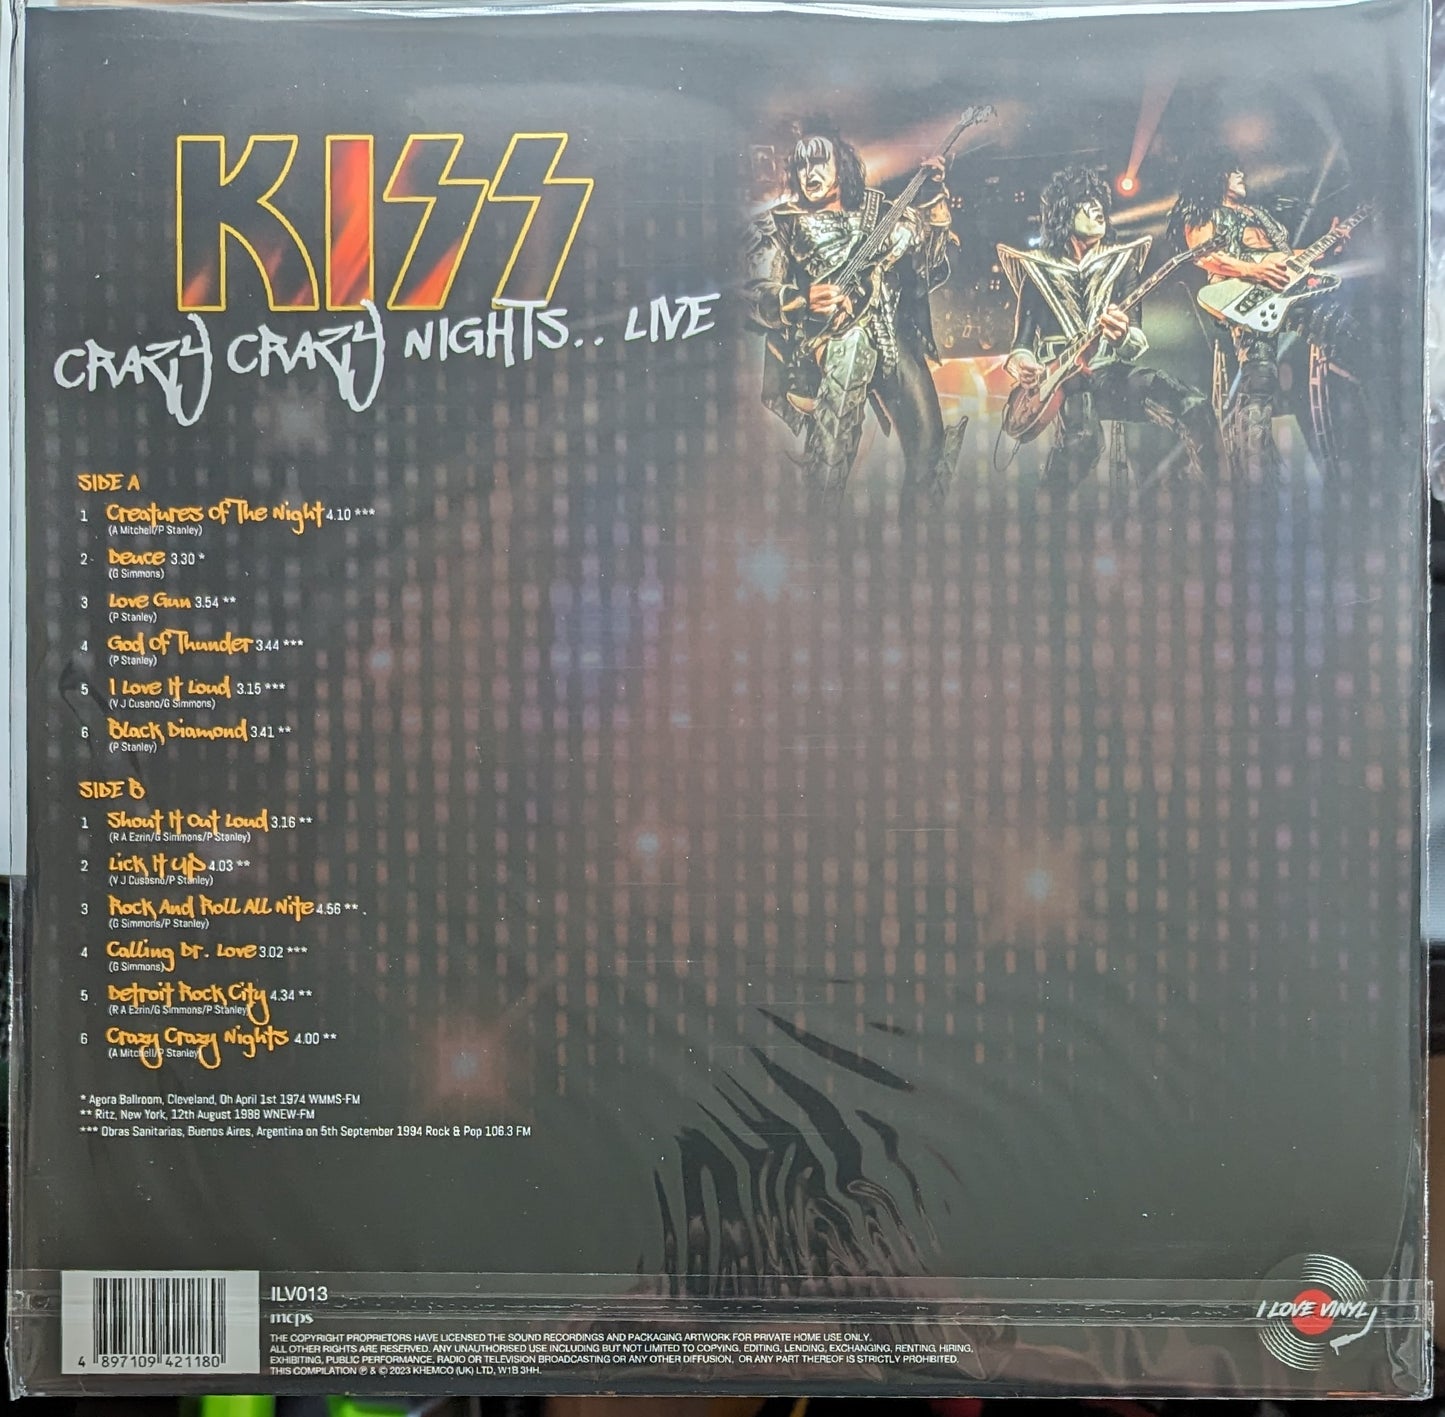 Kiss – Crazy Crazy Nights.. Live